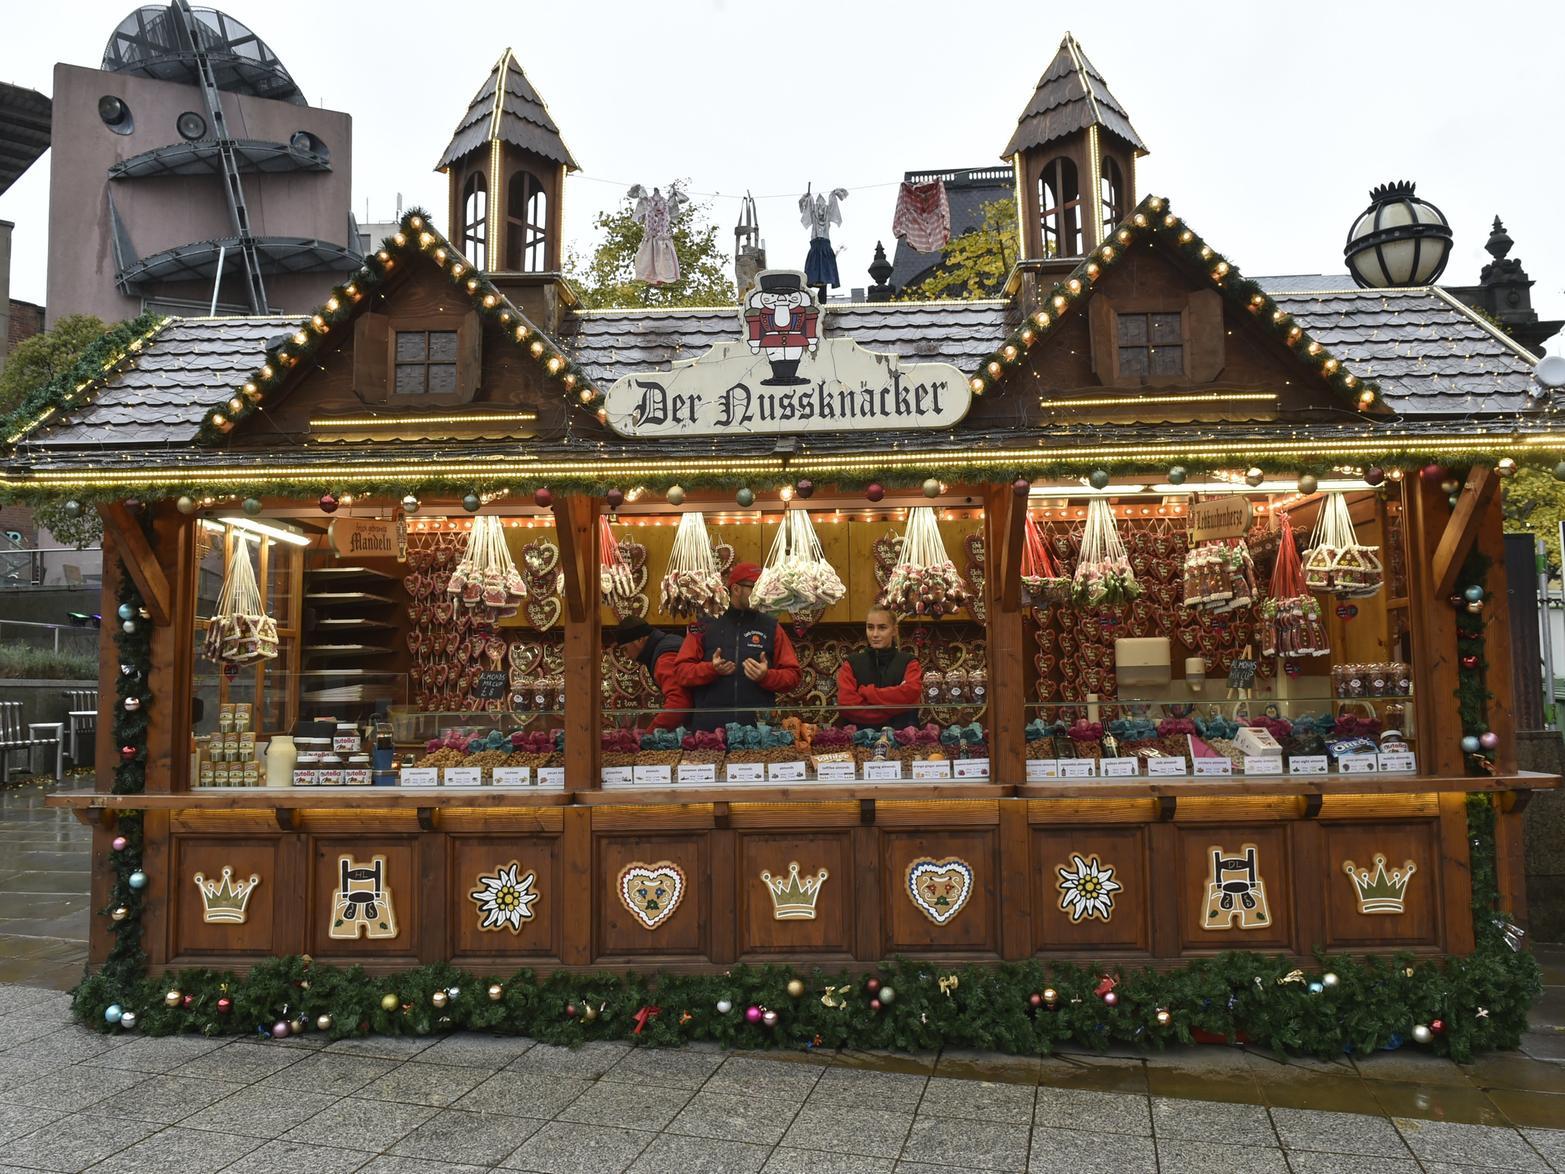 The Leeds German Christmas Market 2019 opened on Friday.